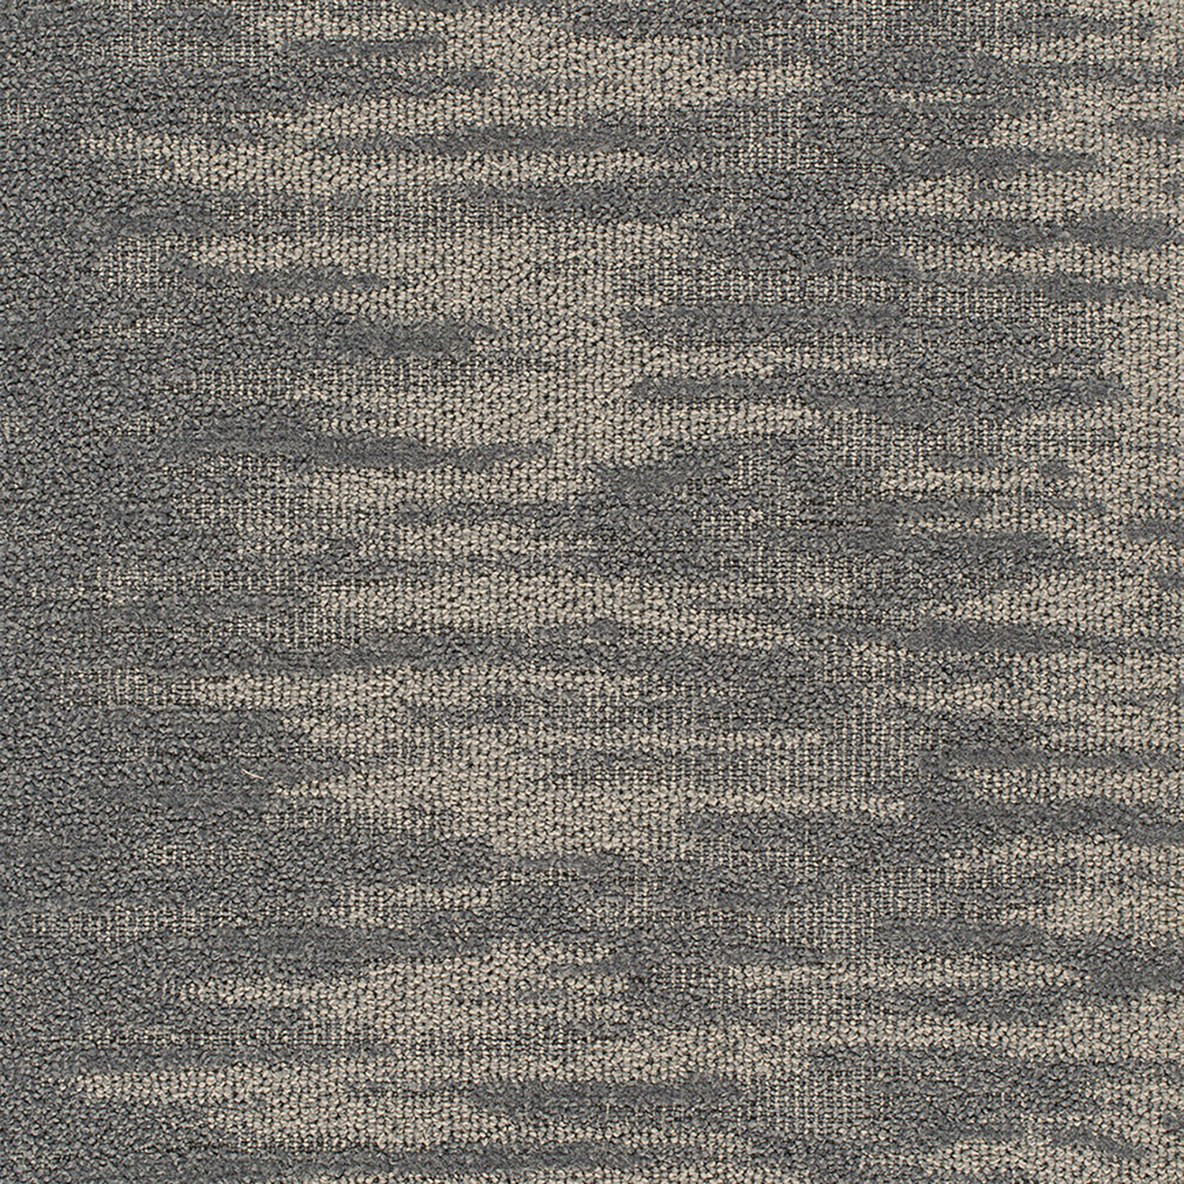 Stingray color close up Up and Away Commercial Carpet Tile .30 Inch x 50x50 cm per Tile